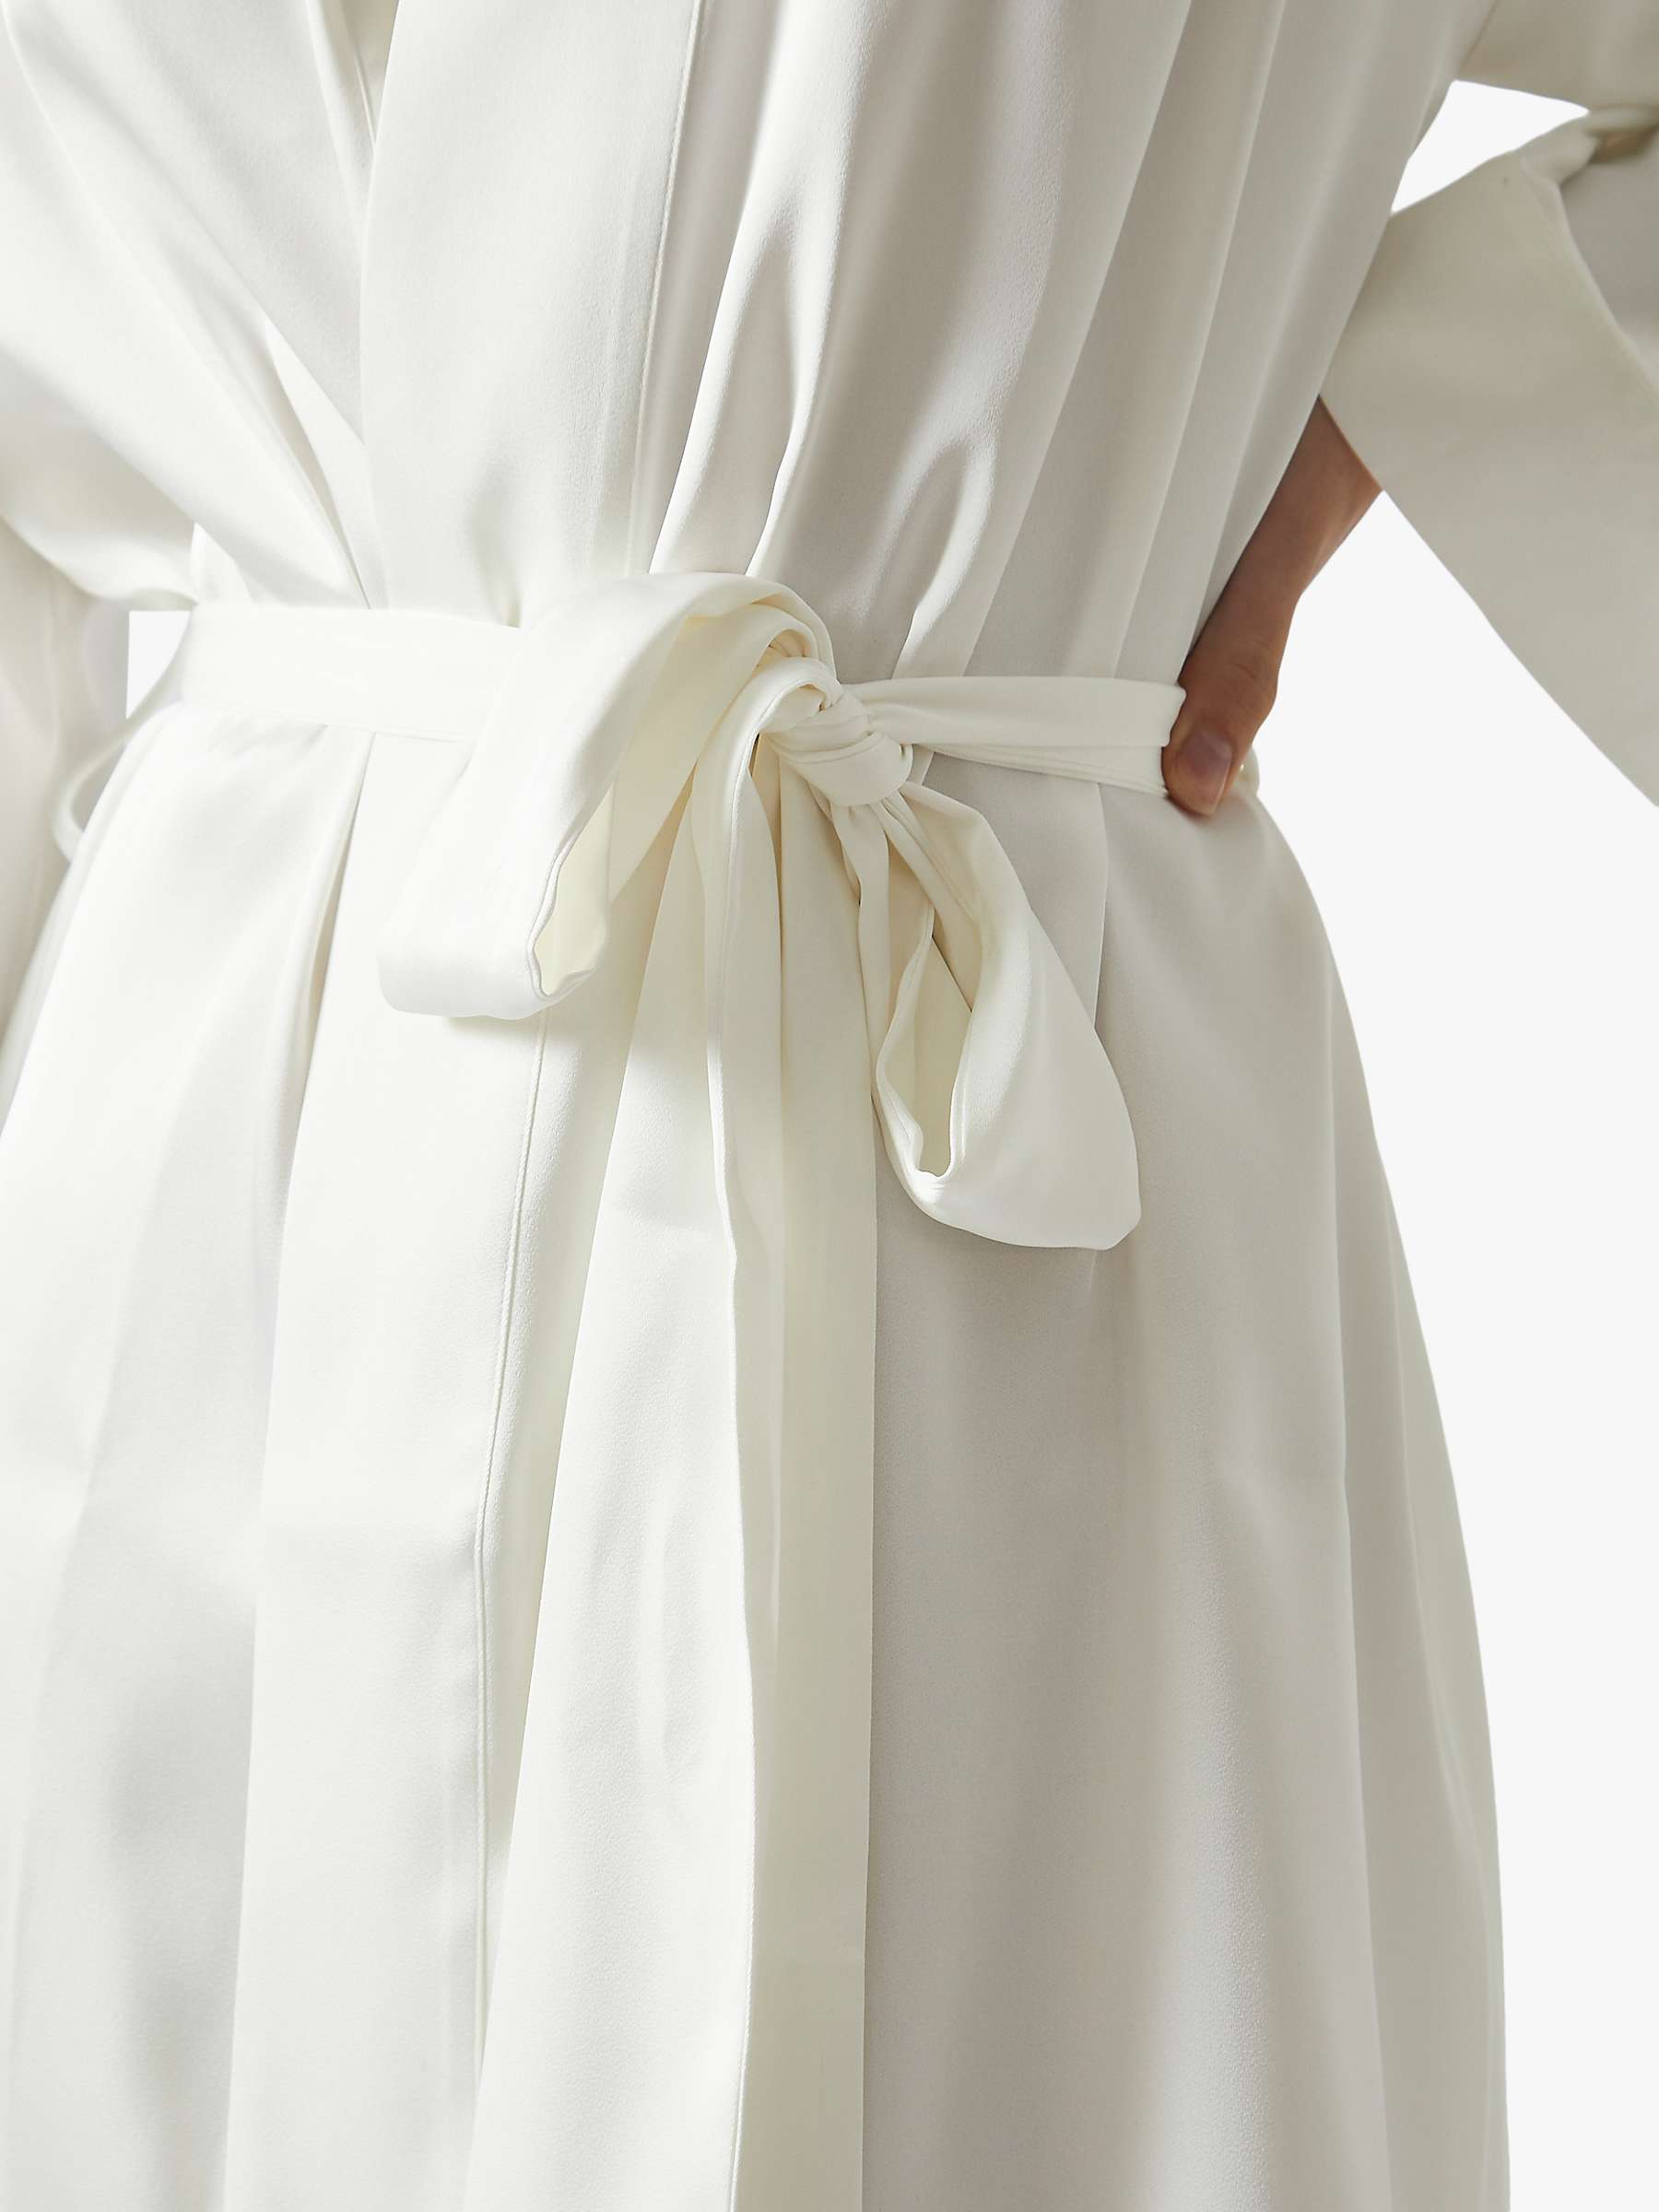 Buy True Decadence Satin Kimono Gown, White Online at johnlewis.com